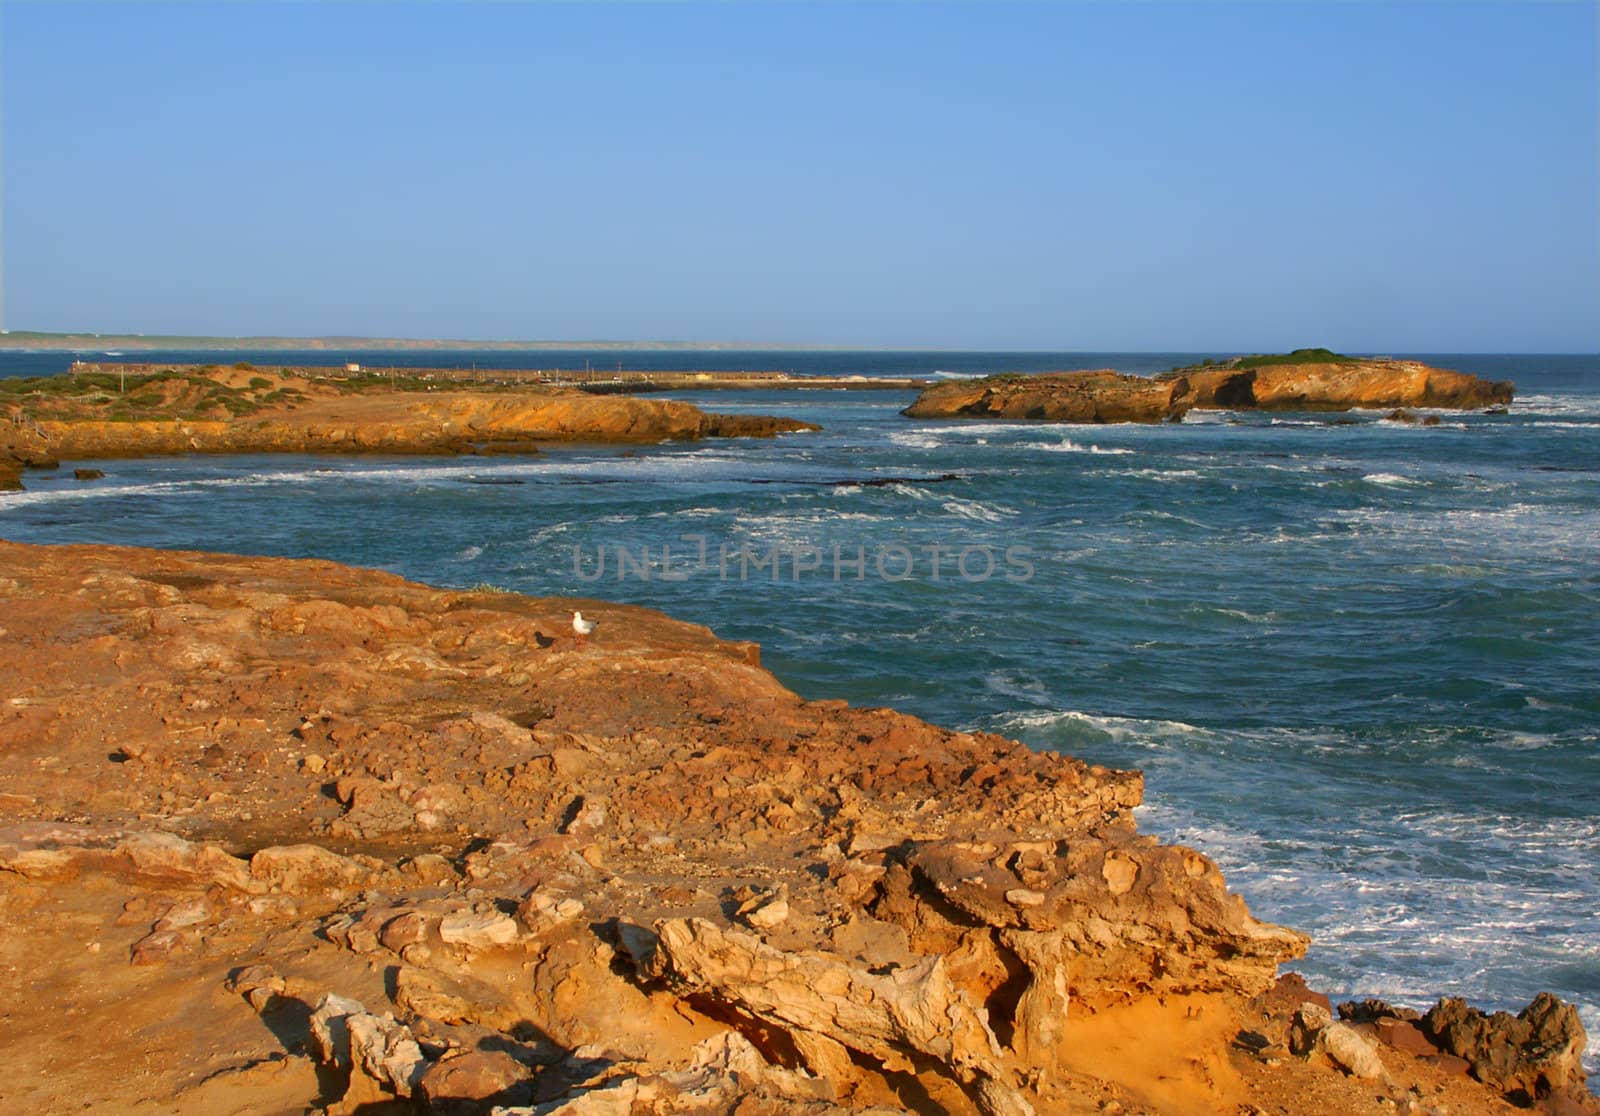 The rocky coastline of southern Australia near Warrnambool, Victoria.